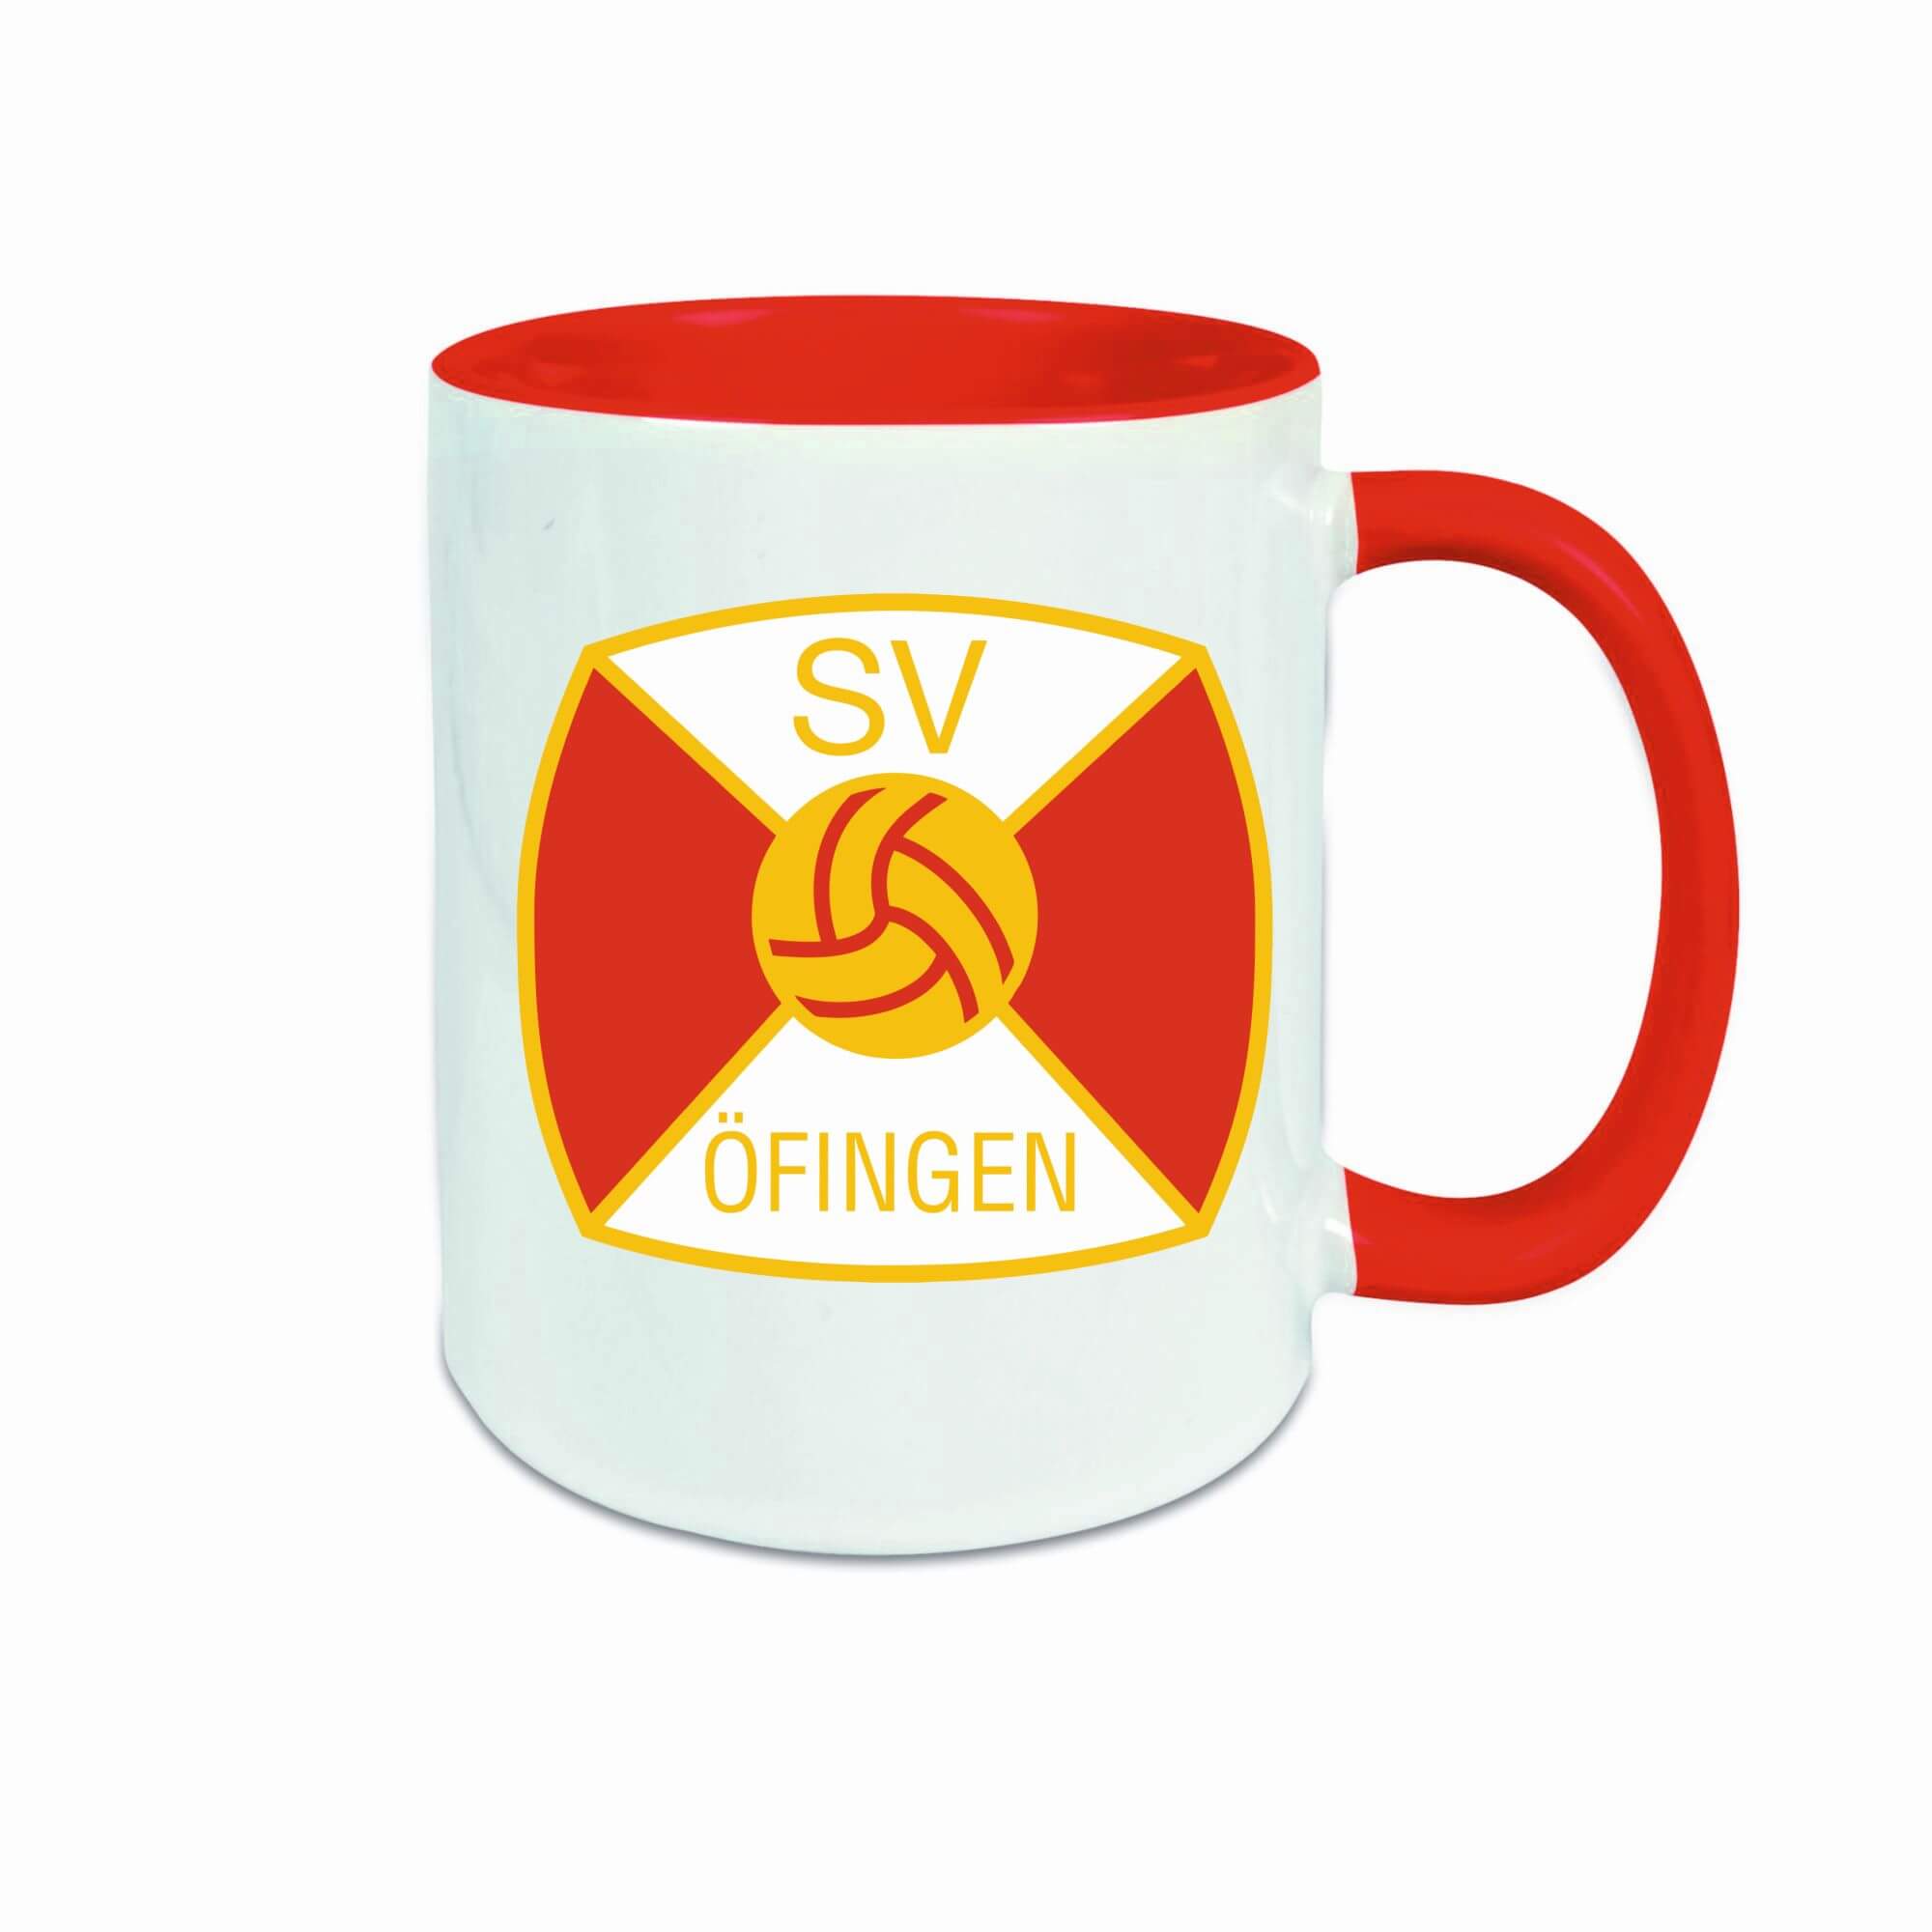 Keramiktasse SV Öfingen